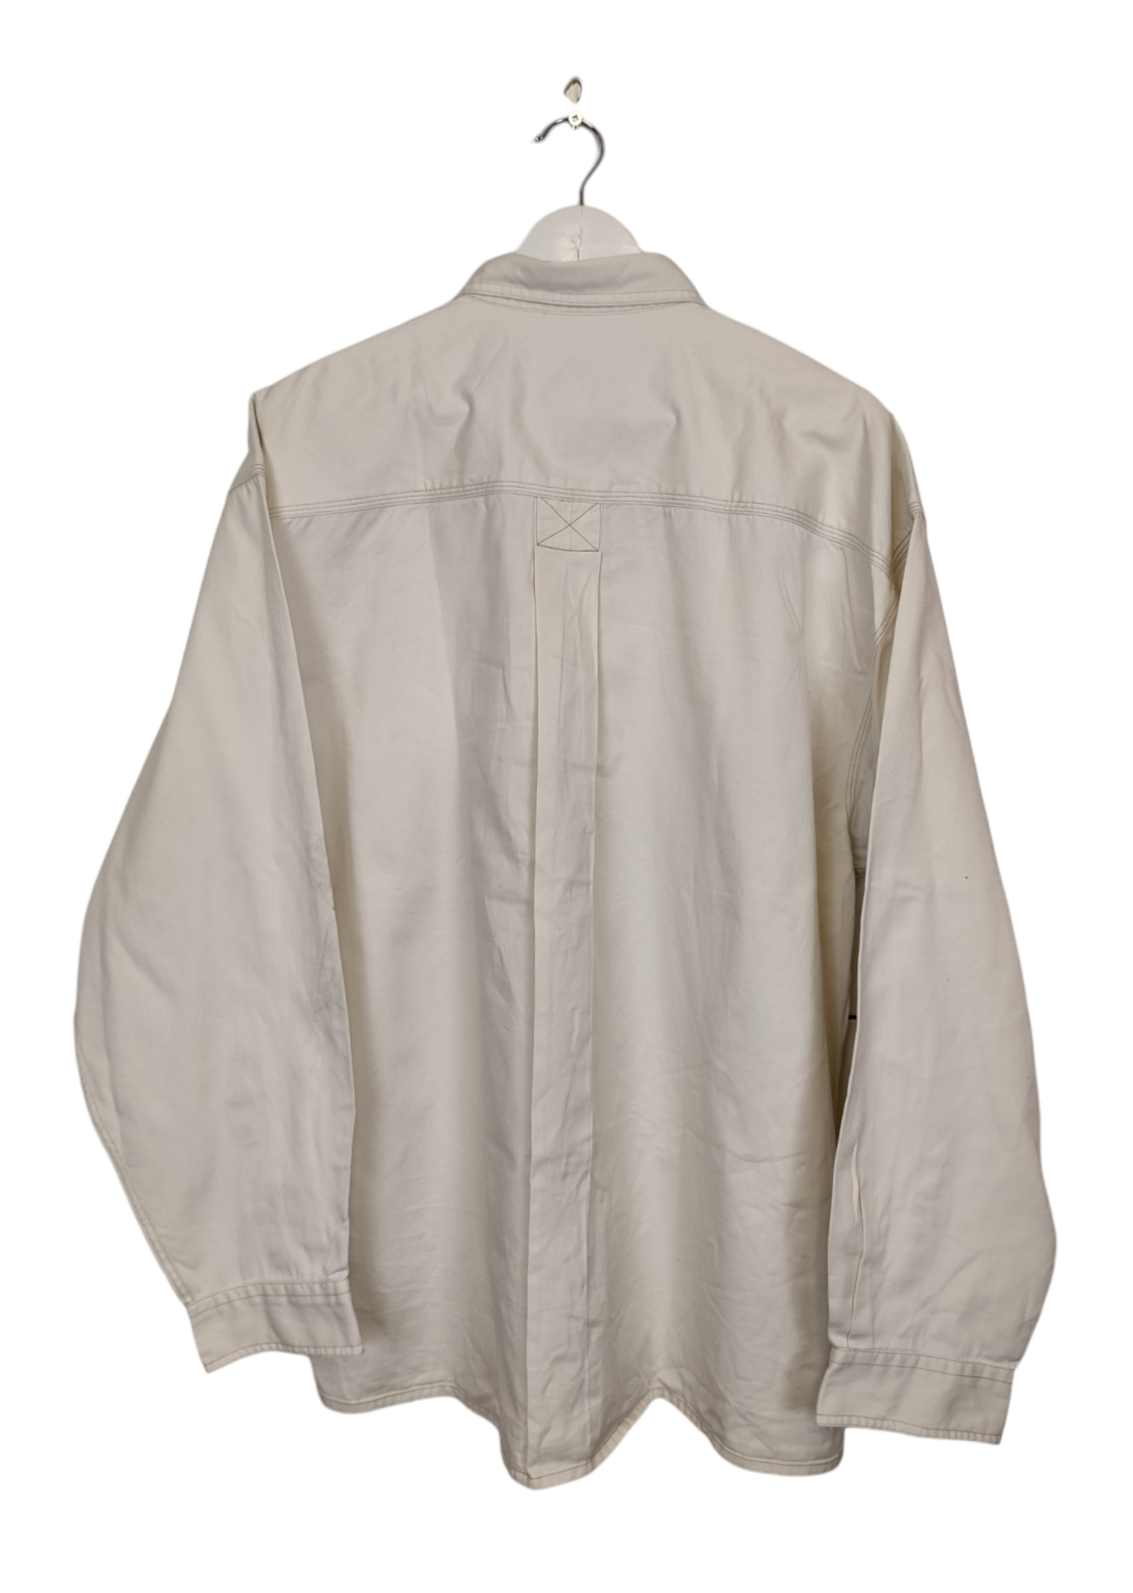 Vintage Ανδρικό Πουκάμισο LIMIT σε Σπασμένο Λευκό Χρώμα (XL)